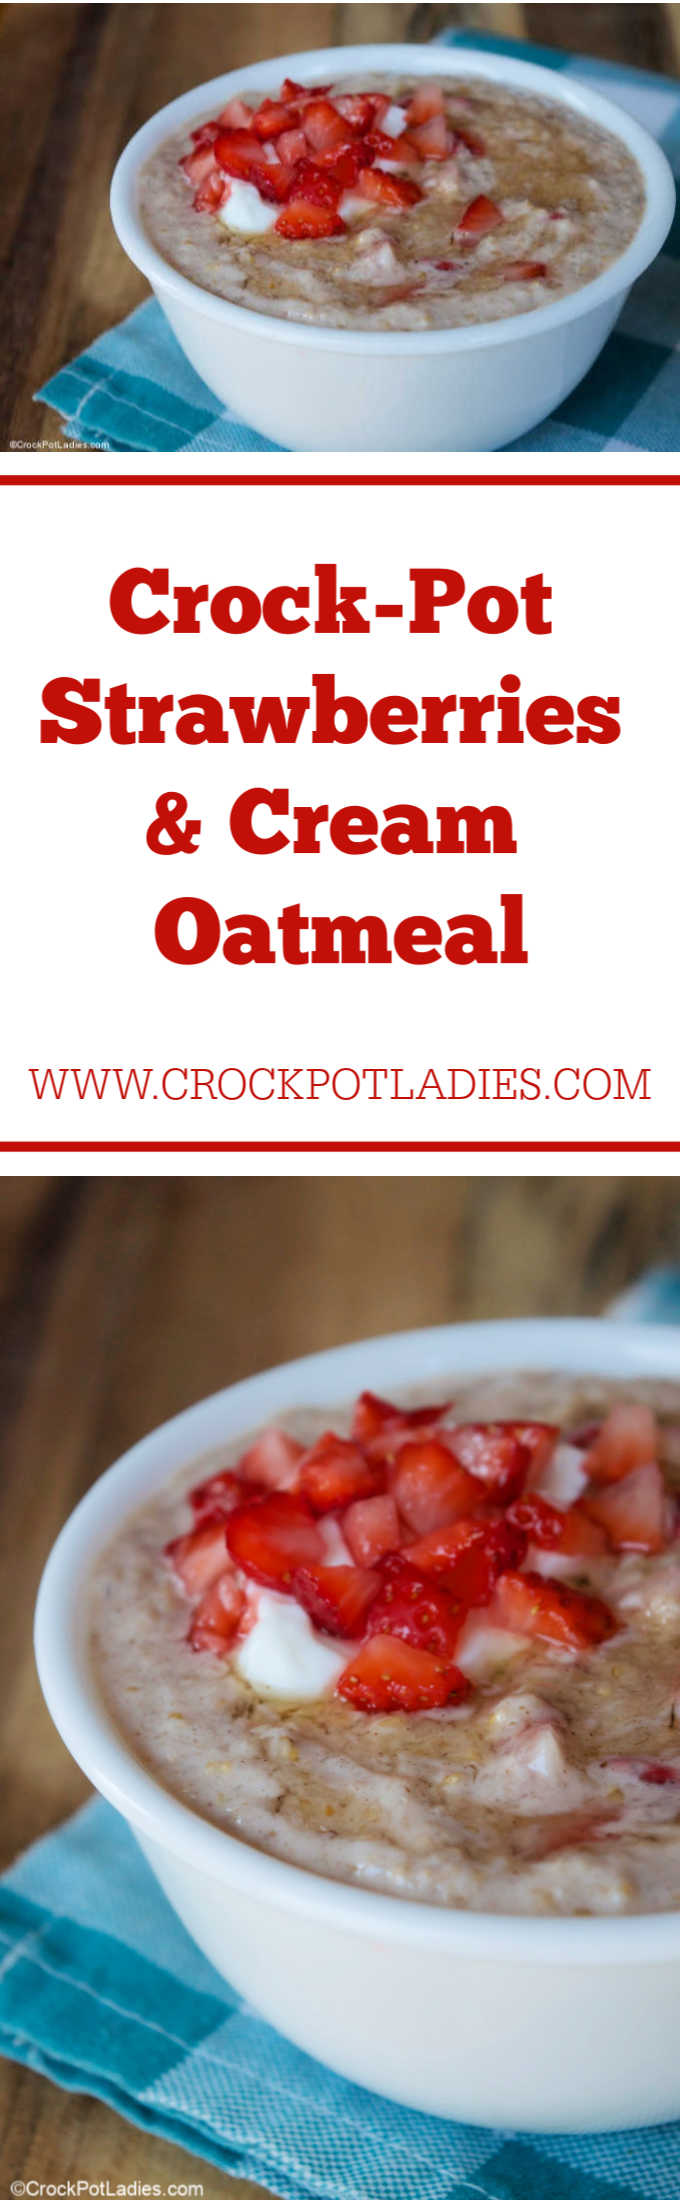 Crock-Pot Strawberries & Cream Oatmeal